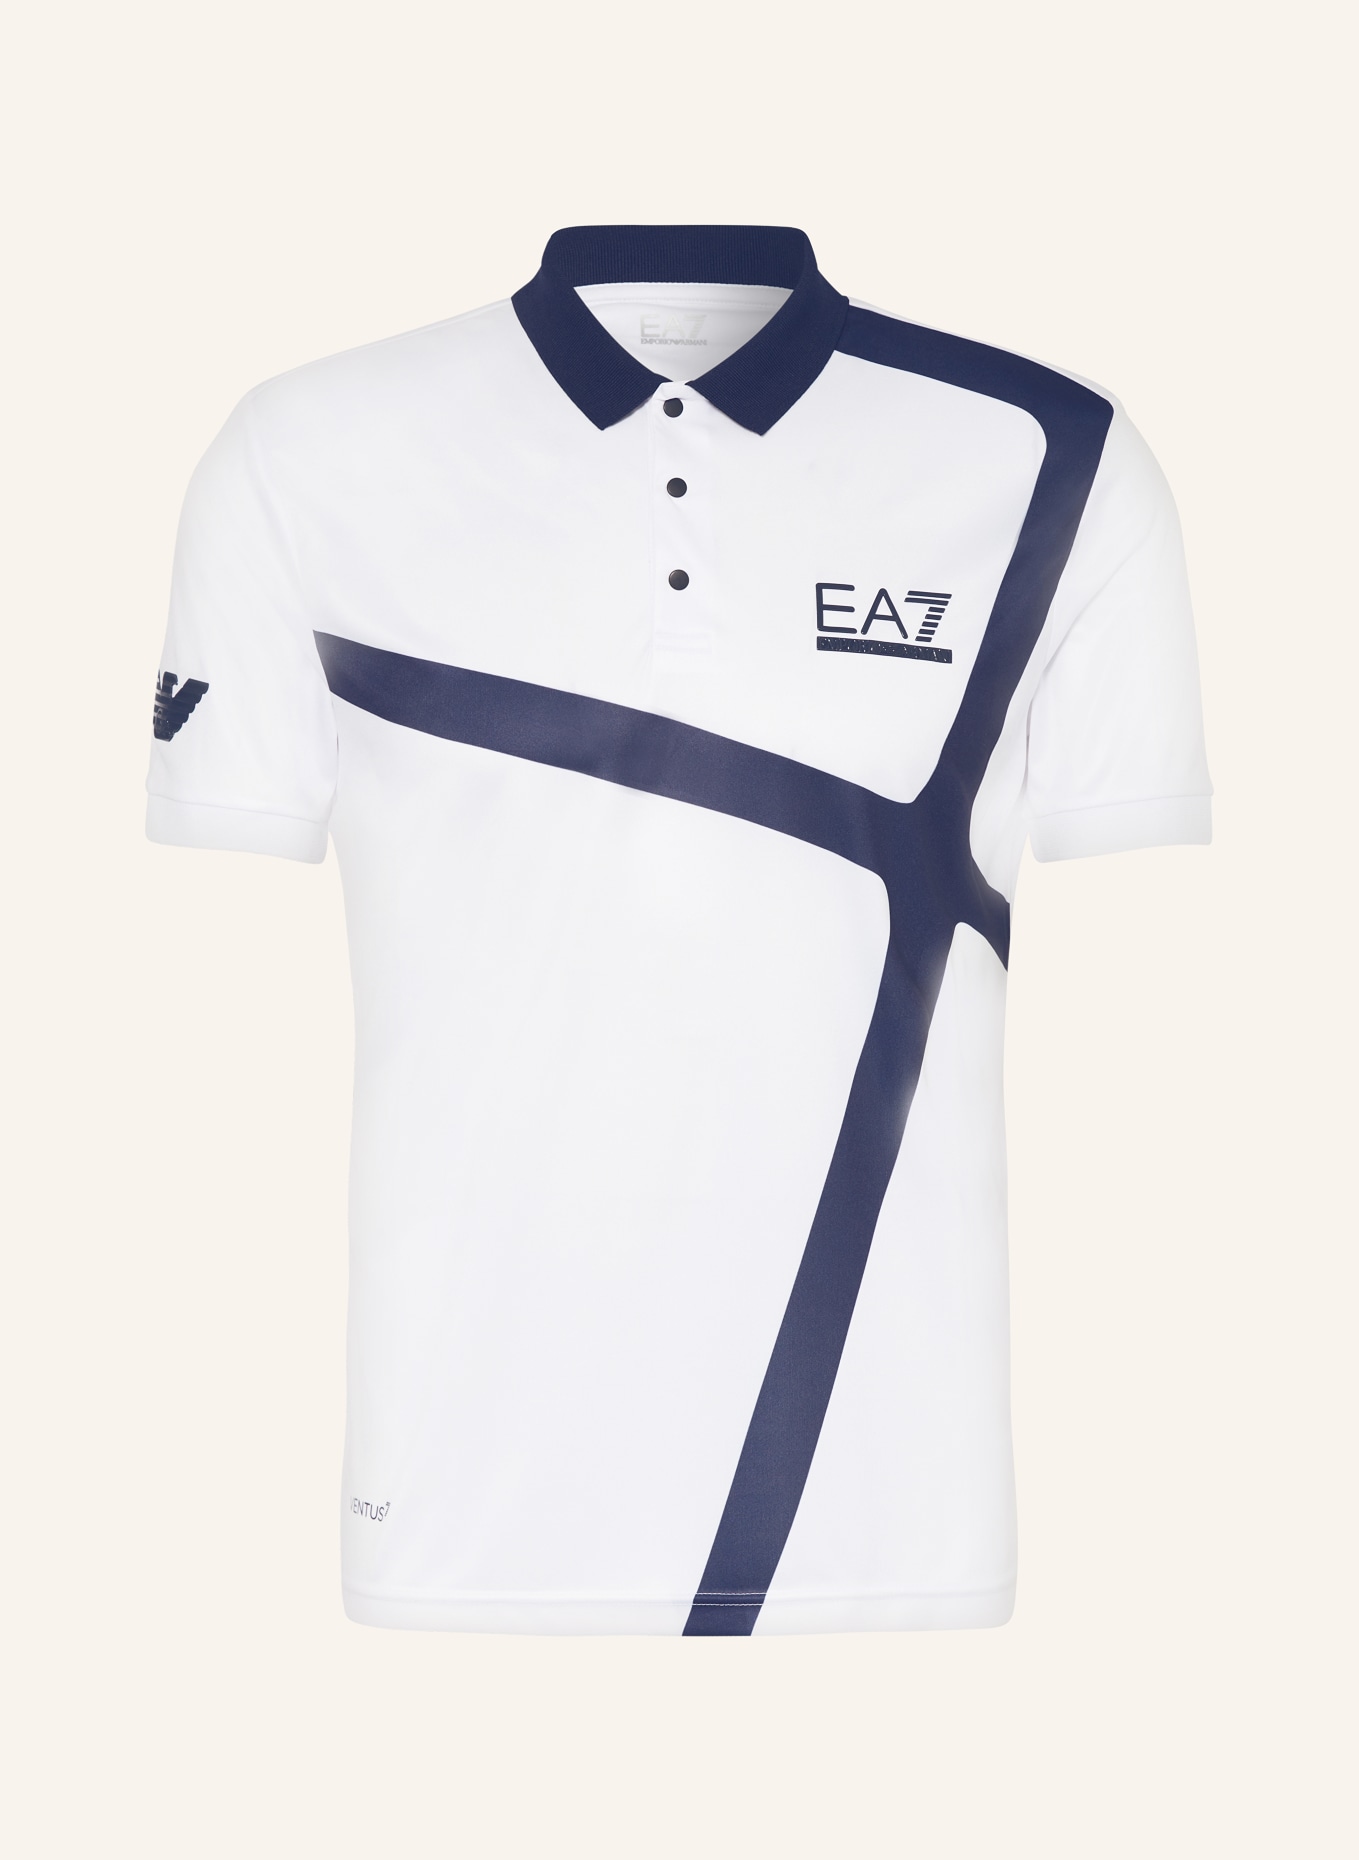 EA7 EMPORIO ARMANI Funktions-Poloshirt PRO, Farbe: WEISS/ DUNKELBLAU (Bild 1)